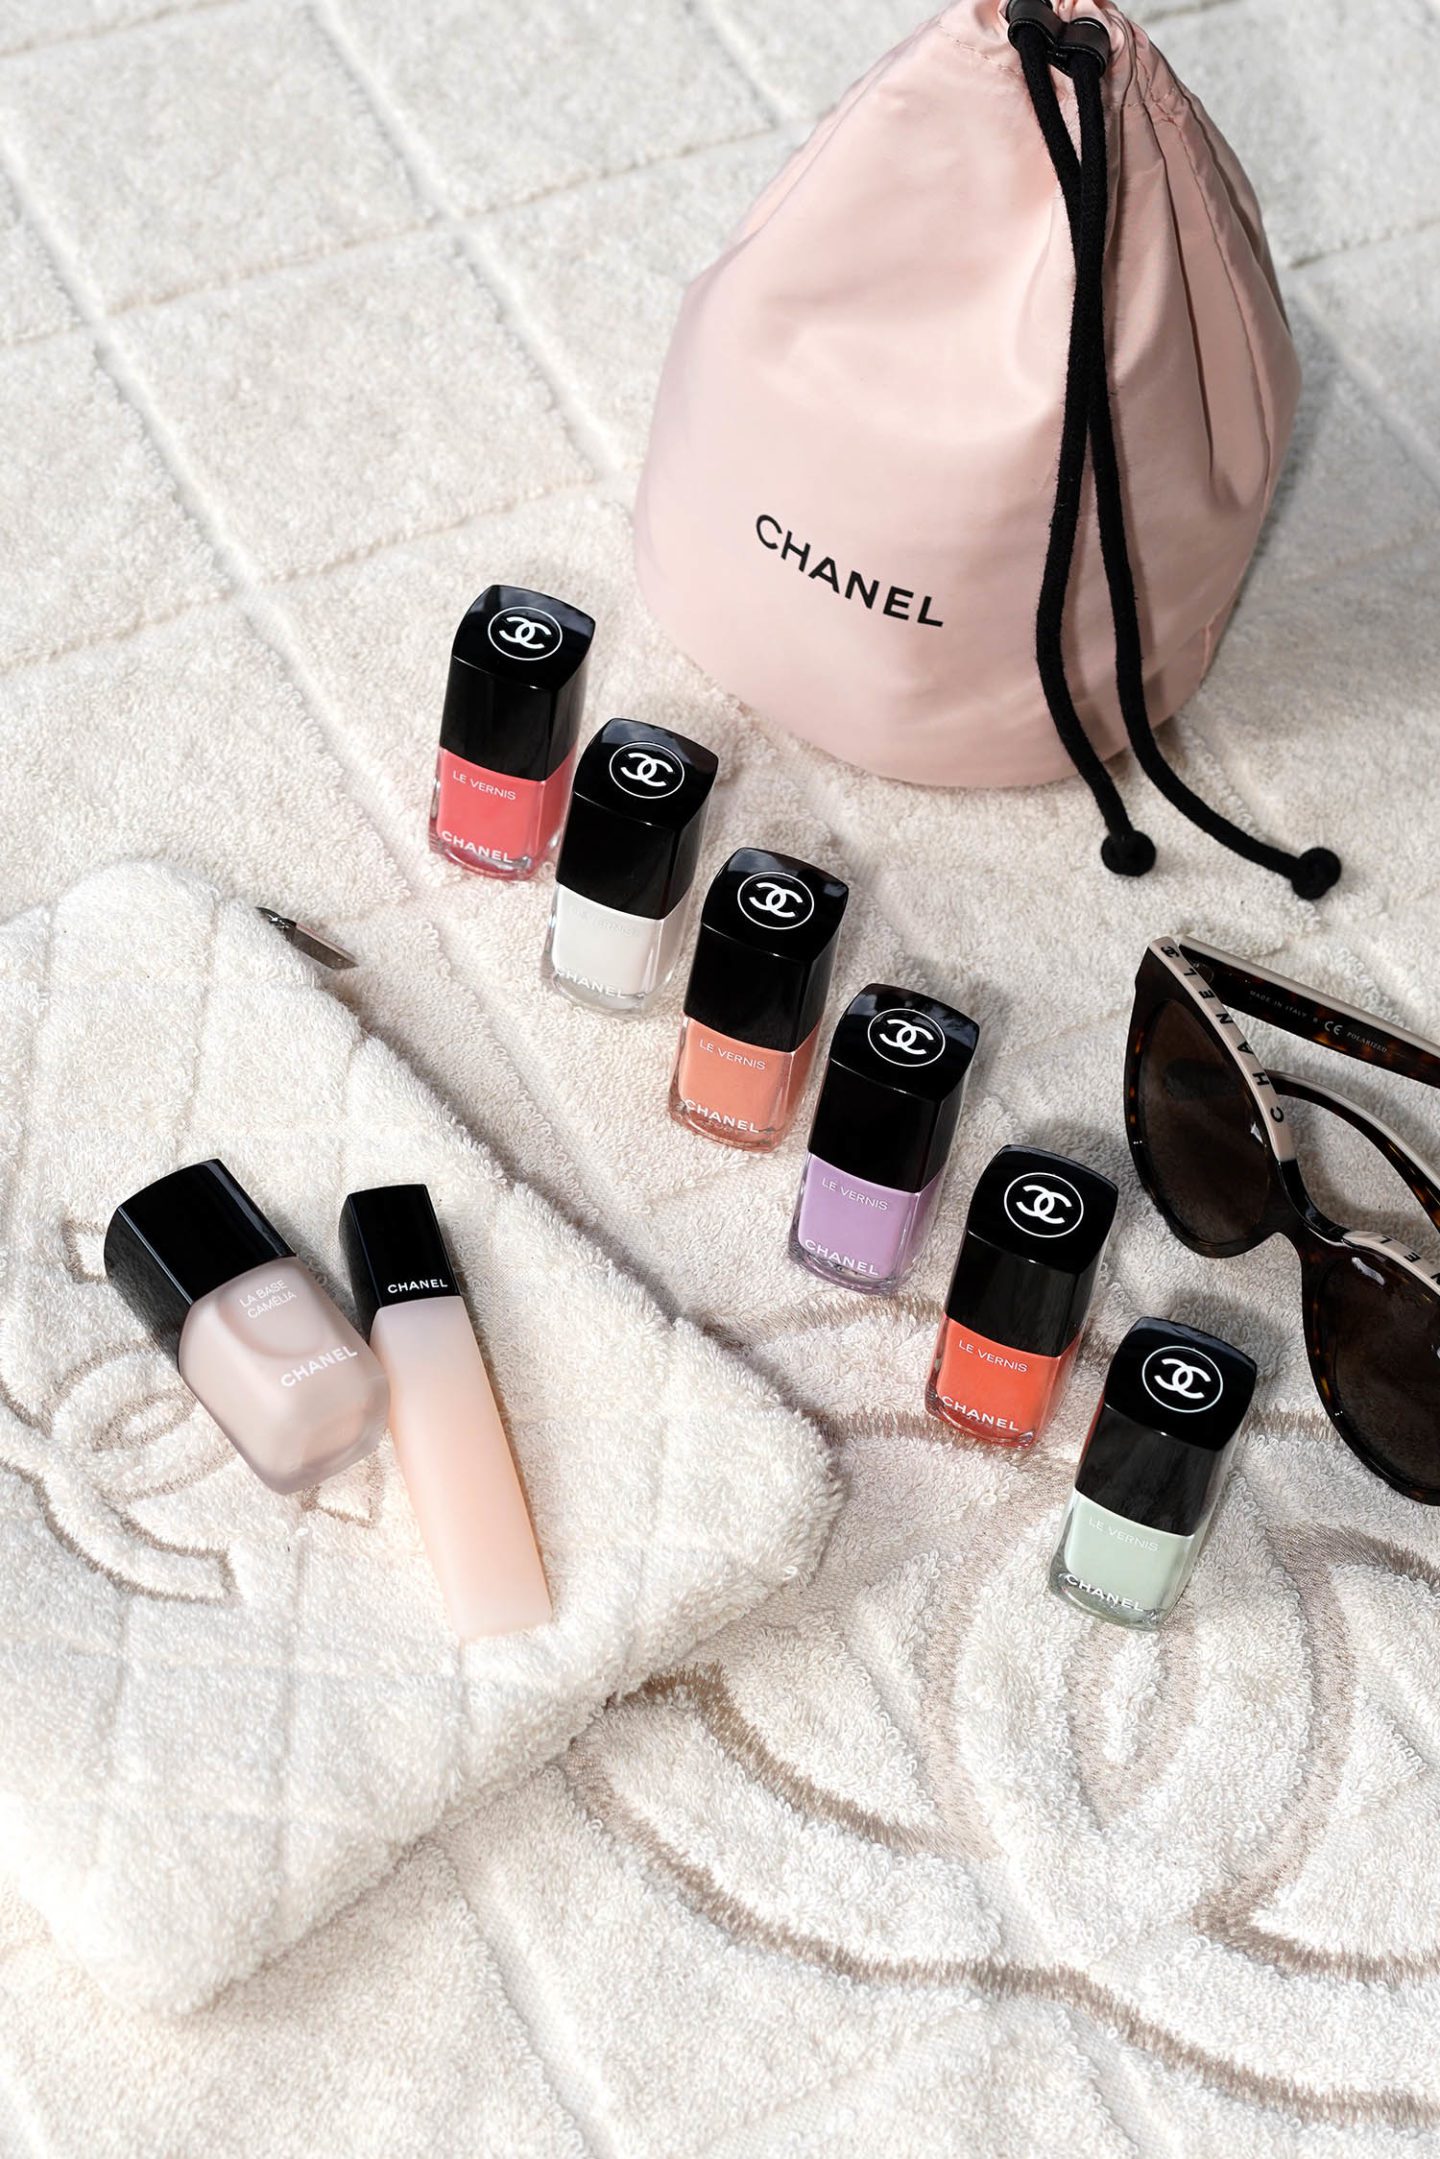 Chanel Summer Nails 2022